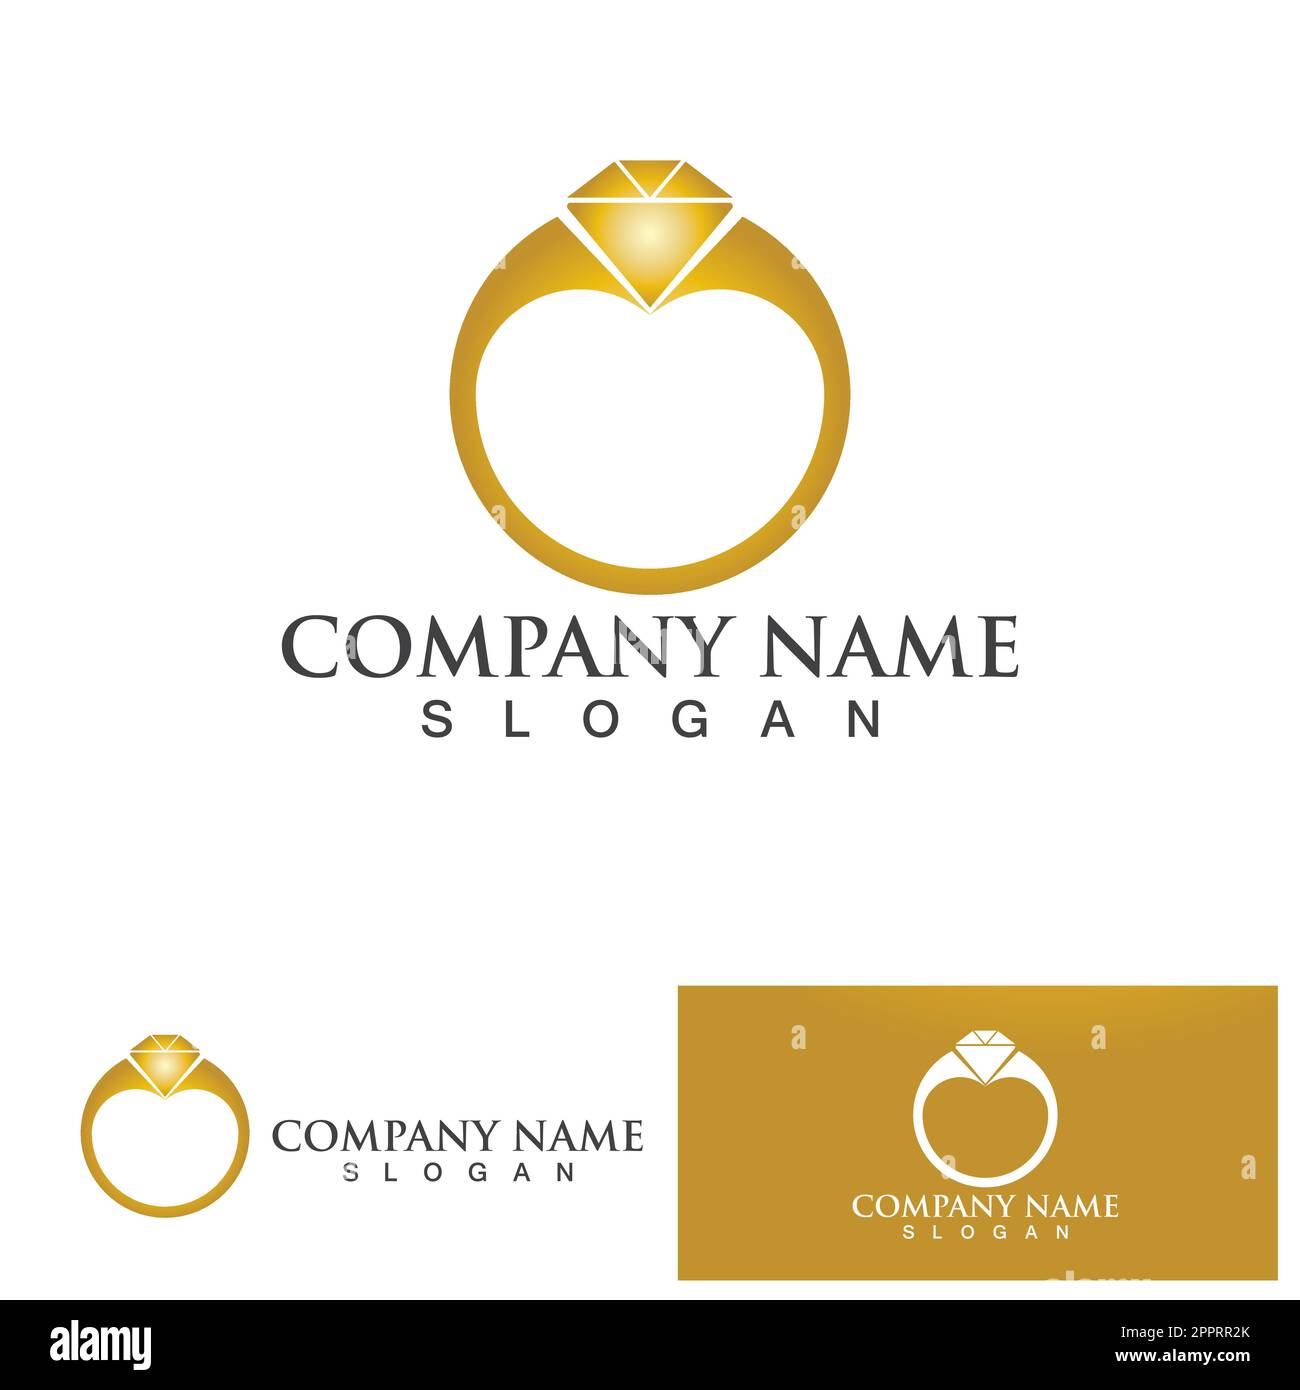 Diamond Ring Jewelry Logo Design Illustration Stock Vector - Illustration  of business, gemstone: 212643595